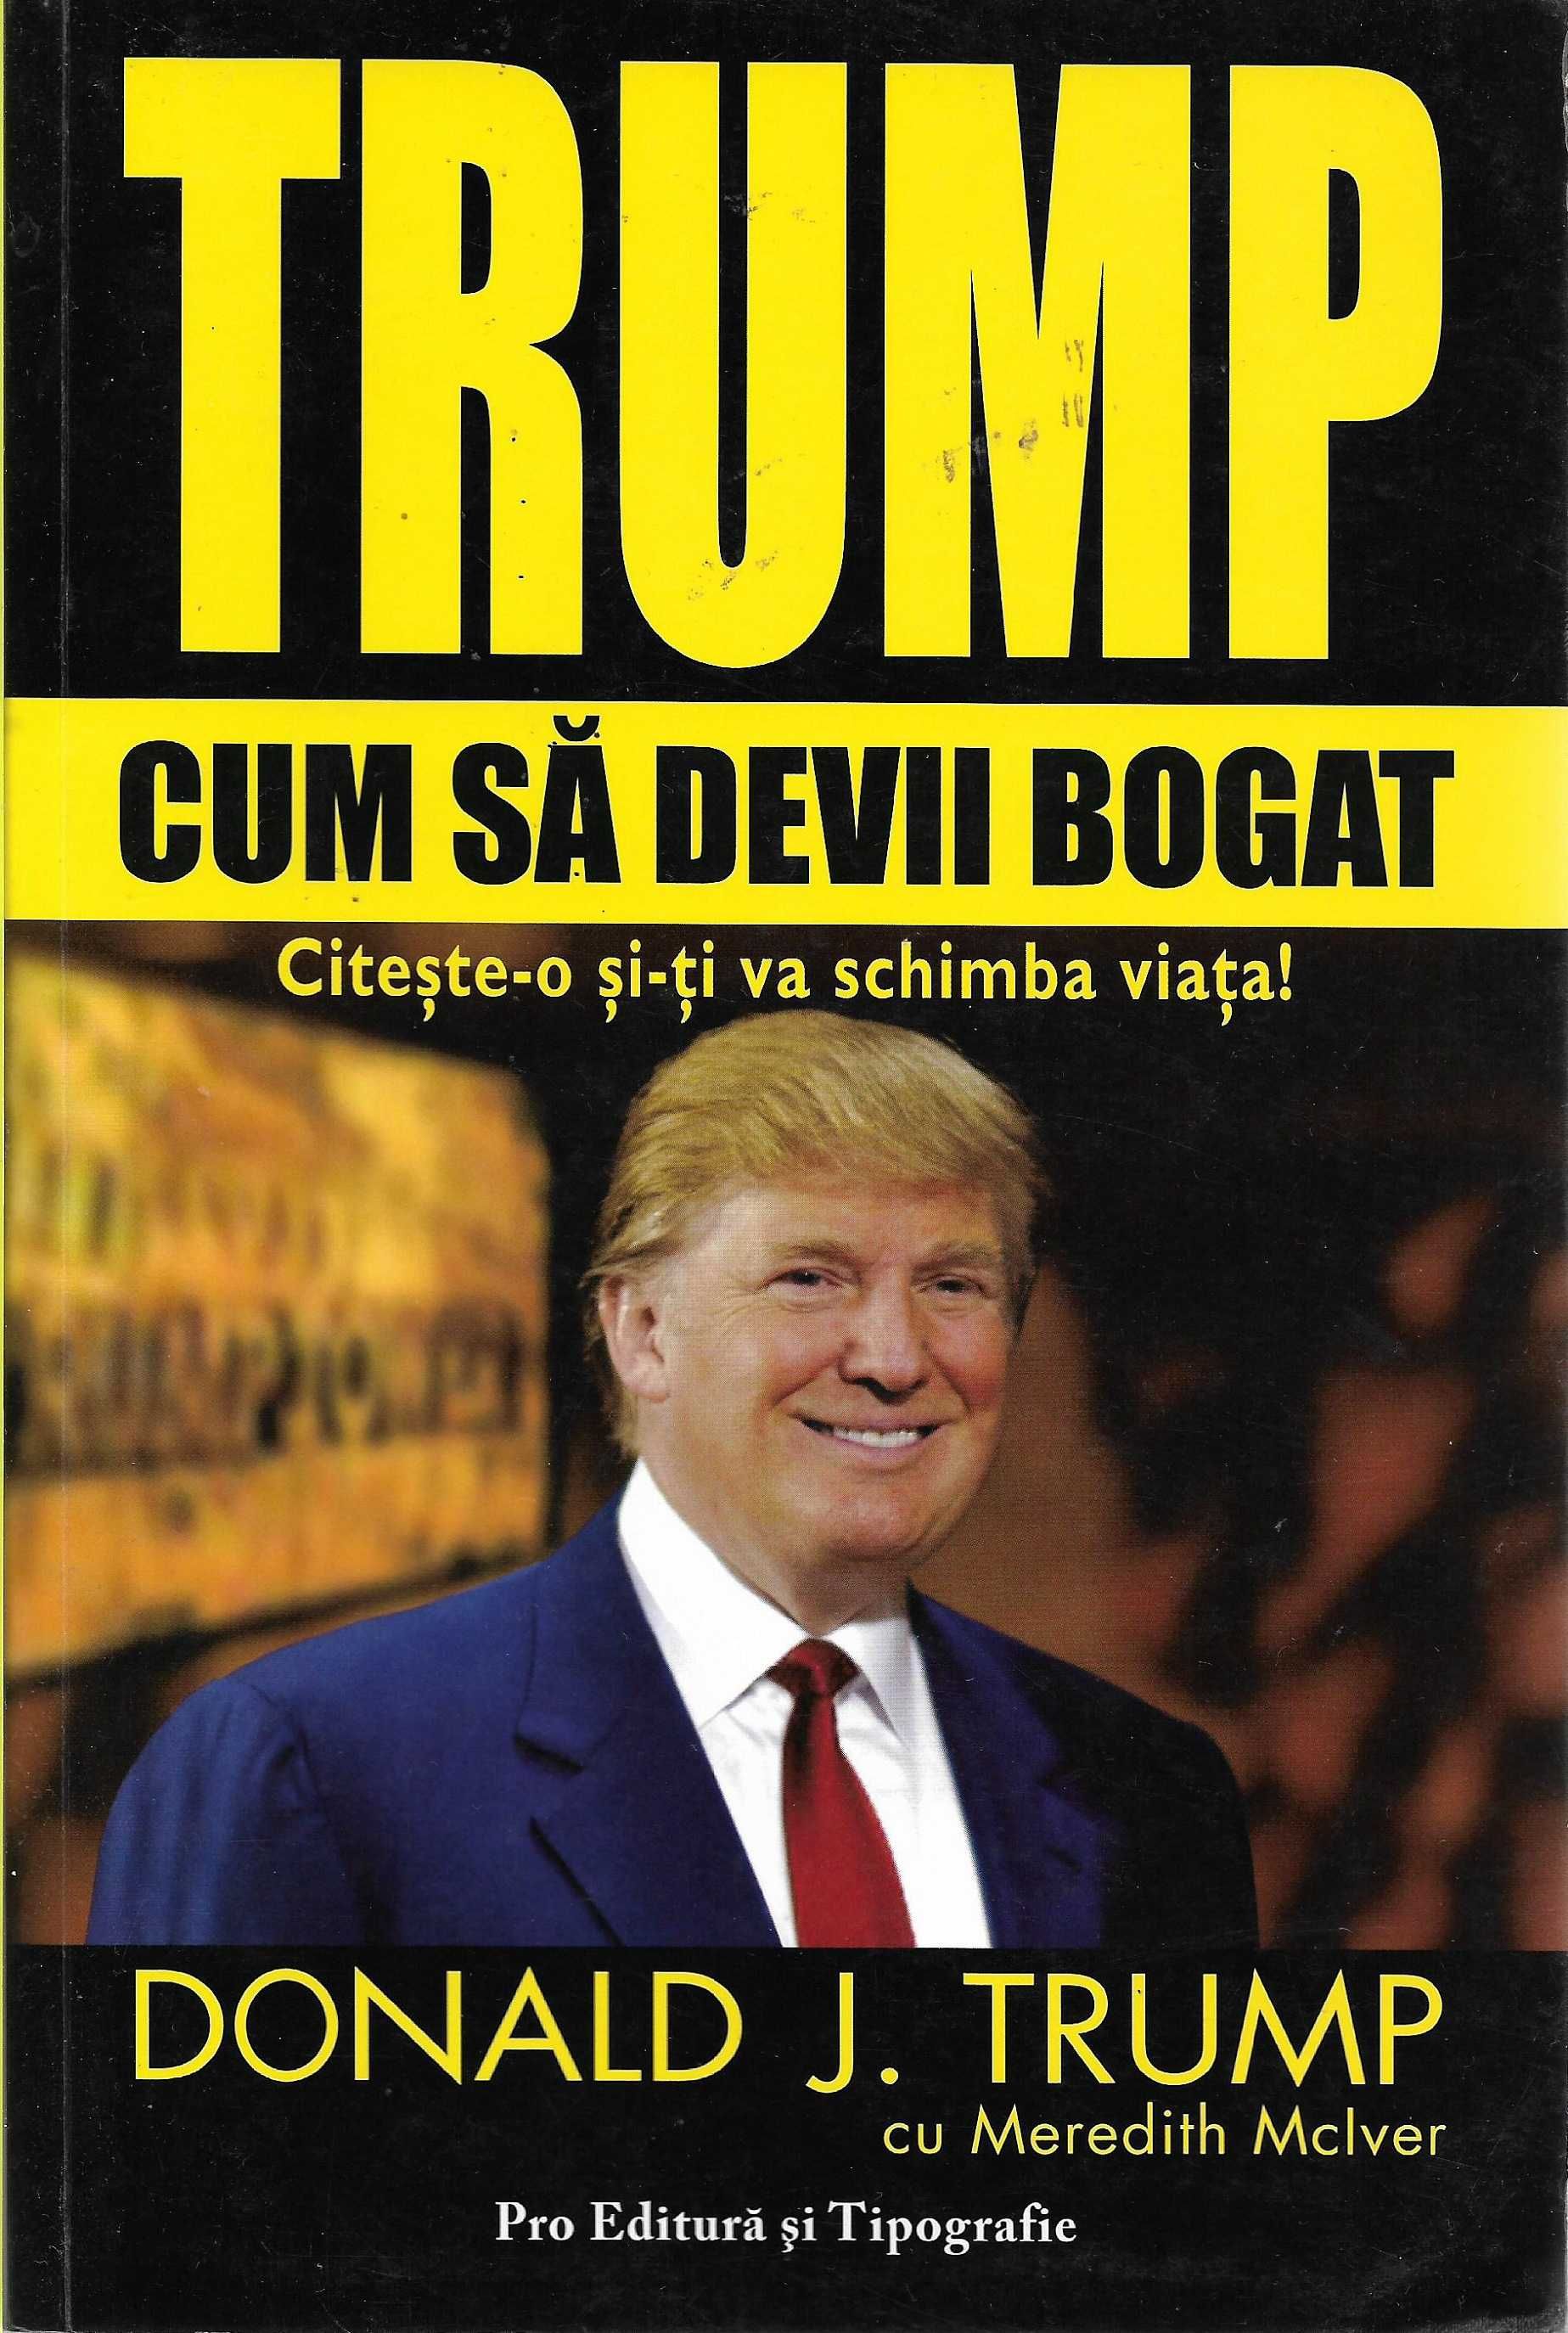 Super carte Donald Trump Cum sa devii bogat, cum sa te imbogatesti